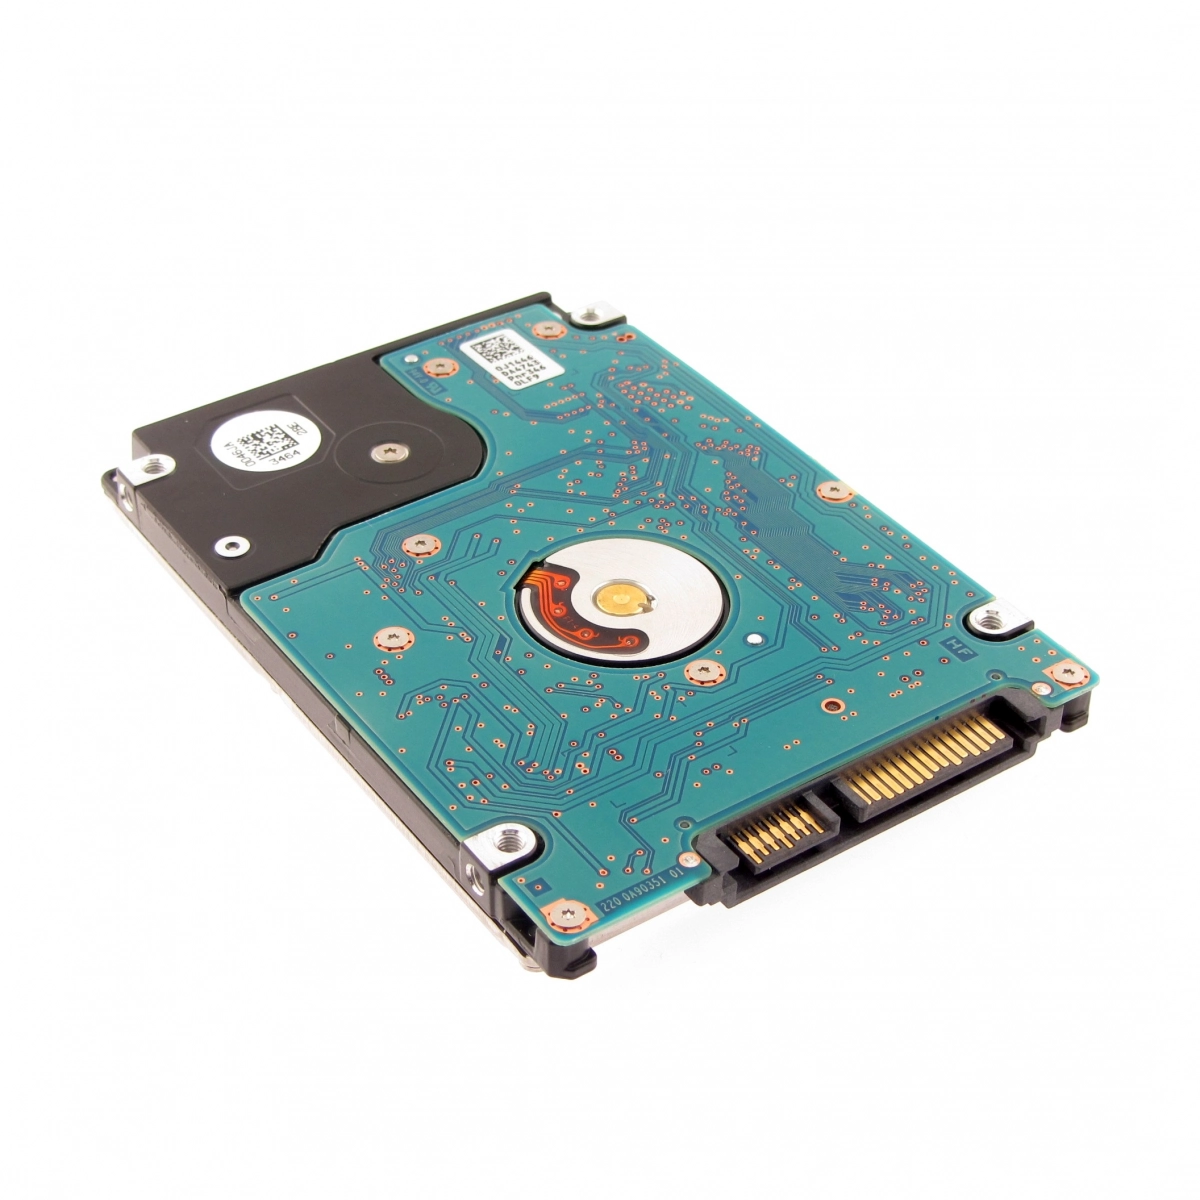 Notebook-Festplatte 500GB, 7200rpm, 128MB für LENOVO ThinkPad T61 (7661)